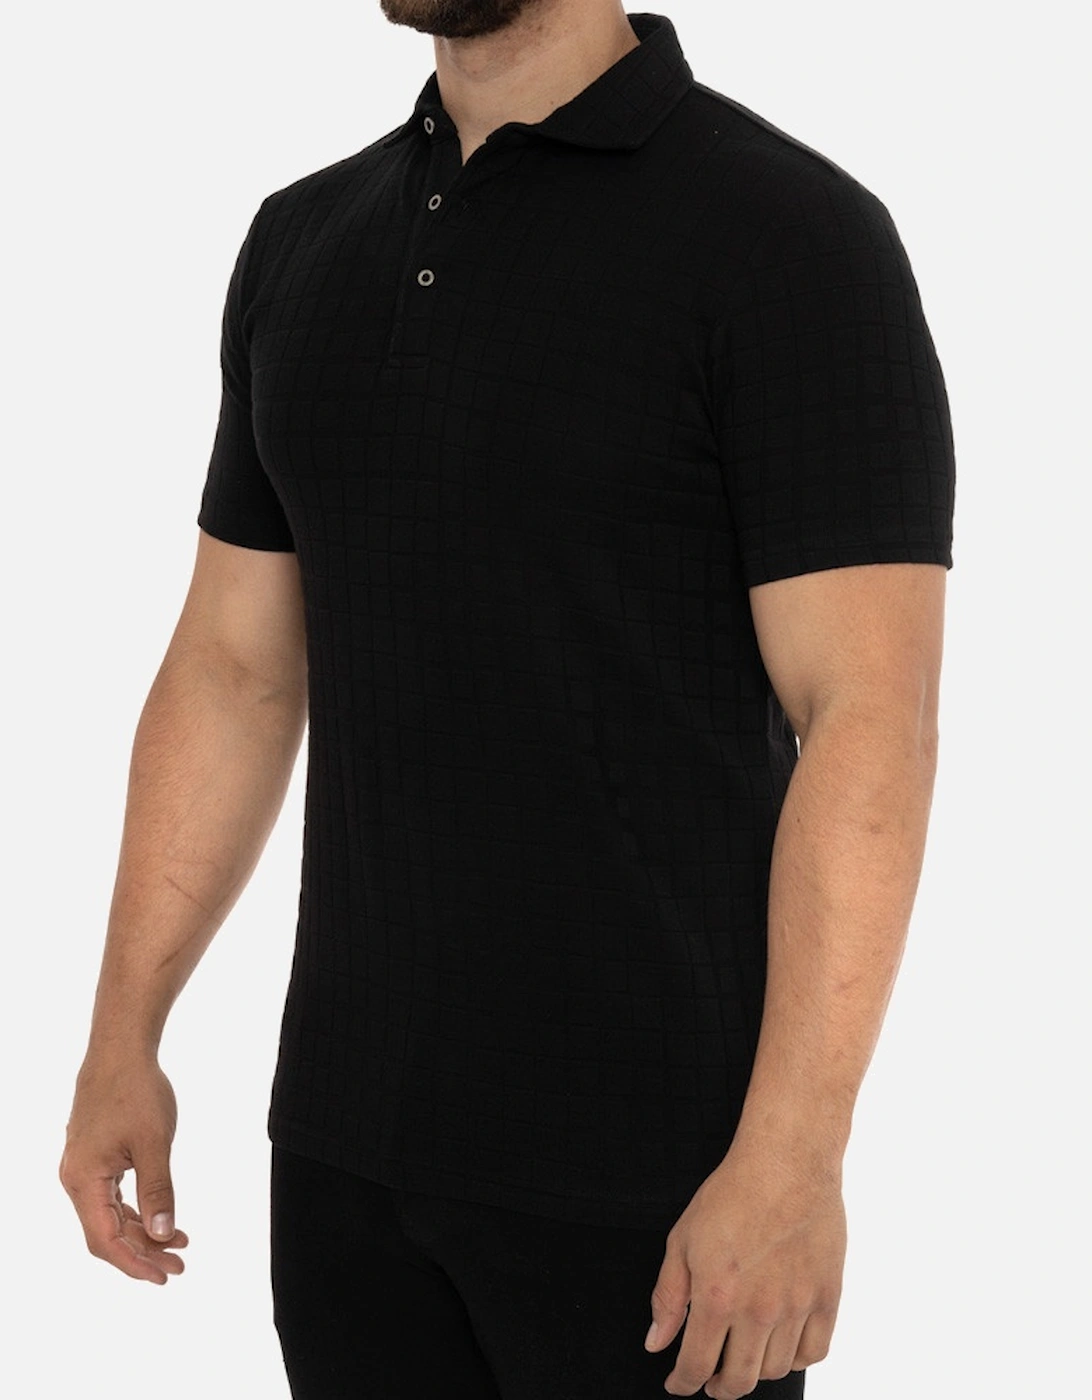 Mens S/S Check Polo Shirt (Black)